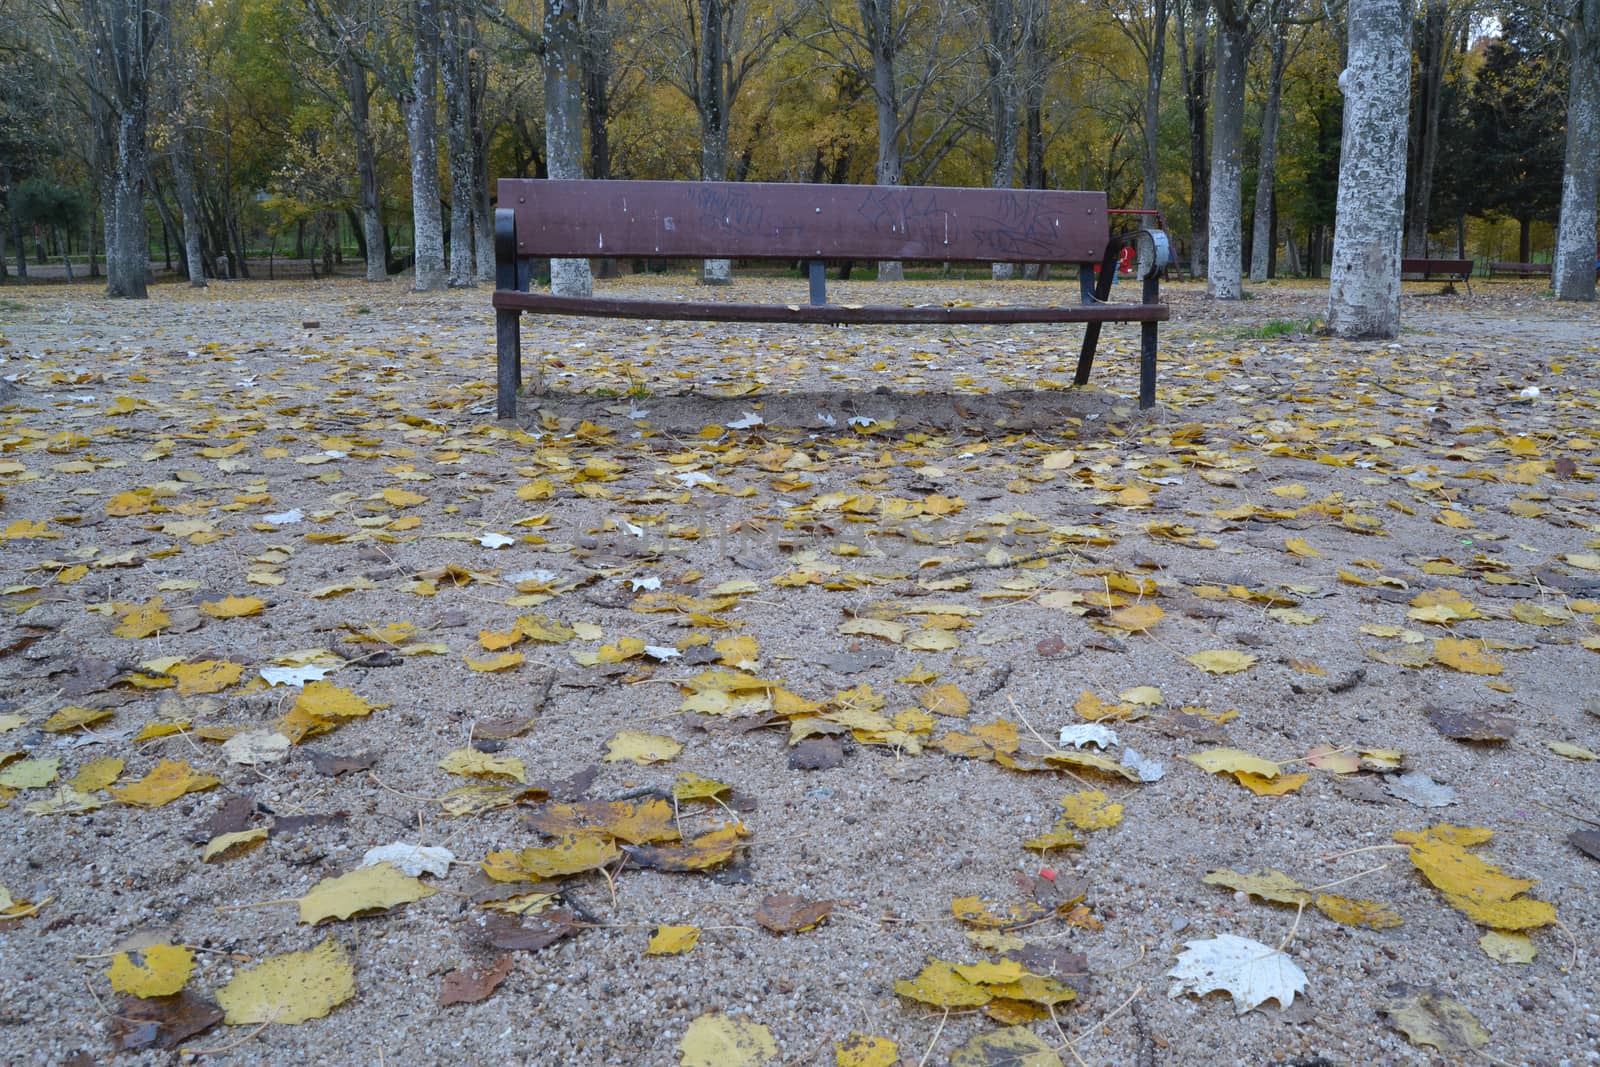 Bench in the park Casa de campo, Madrid, Spain. Autumn